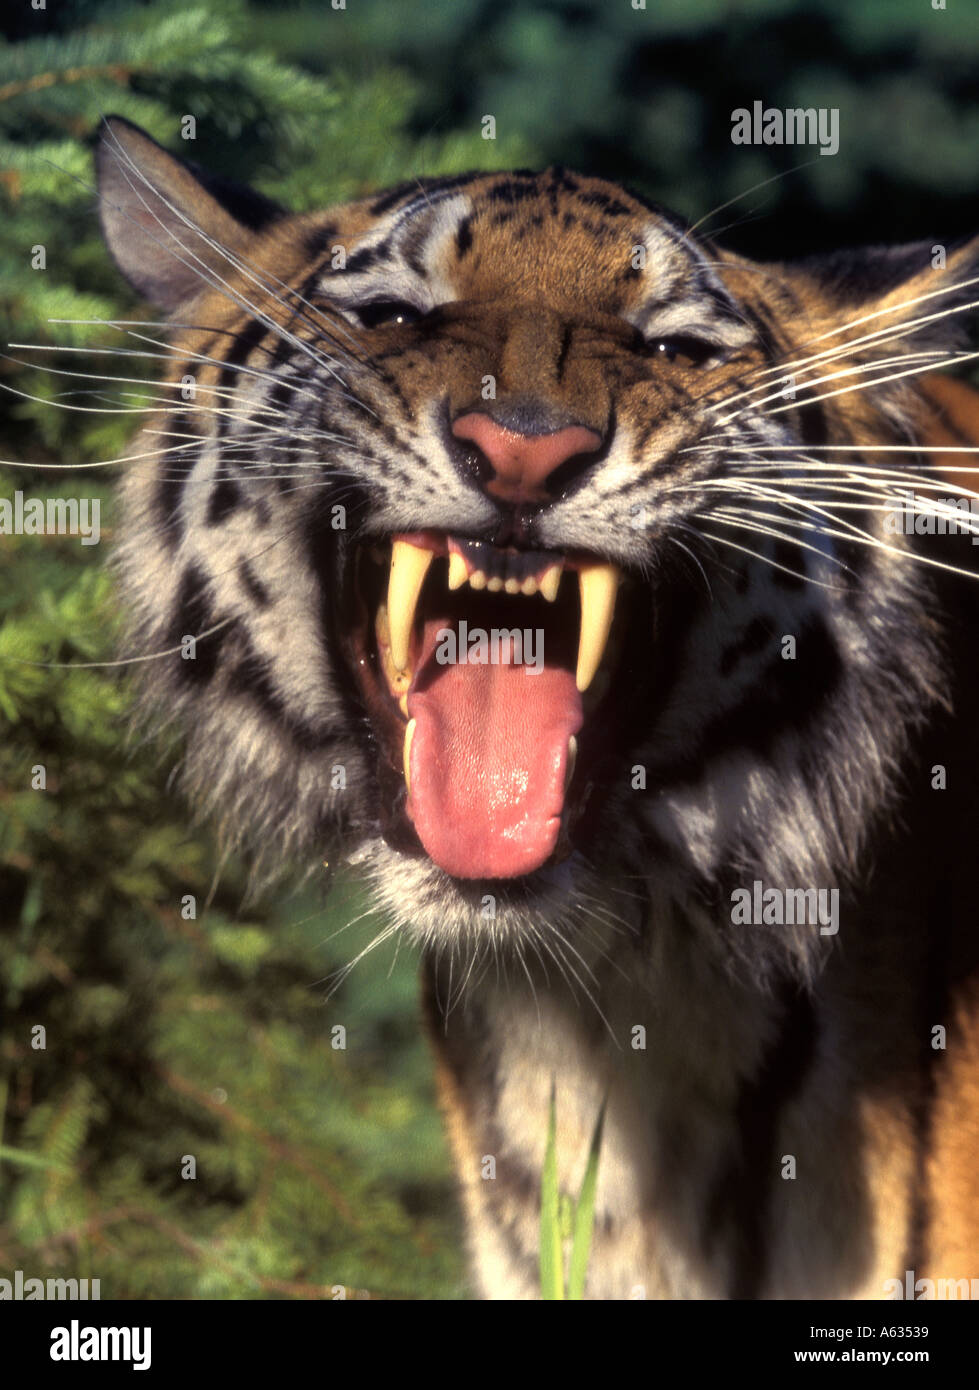 siberian tiger growling Stock Photo